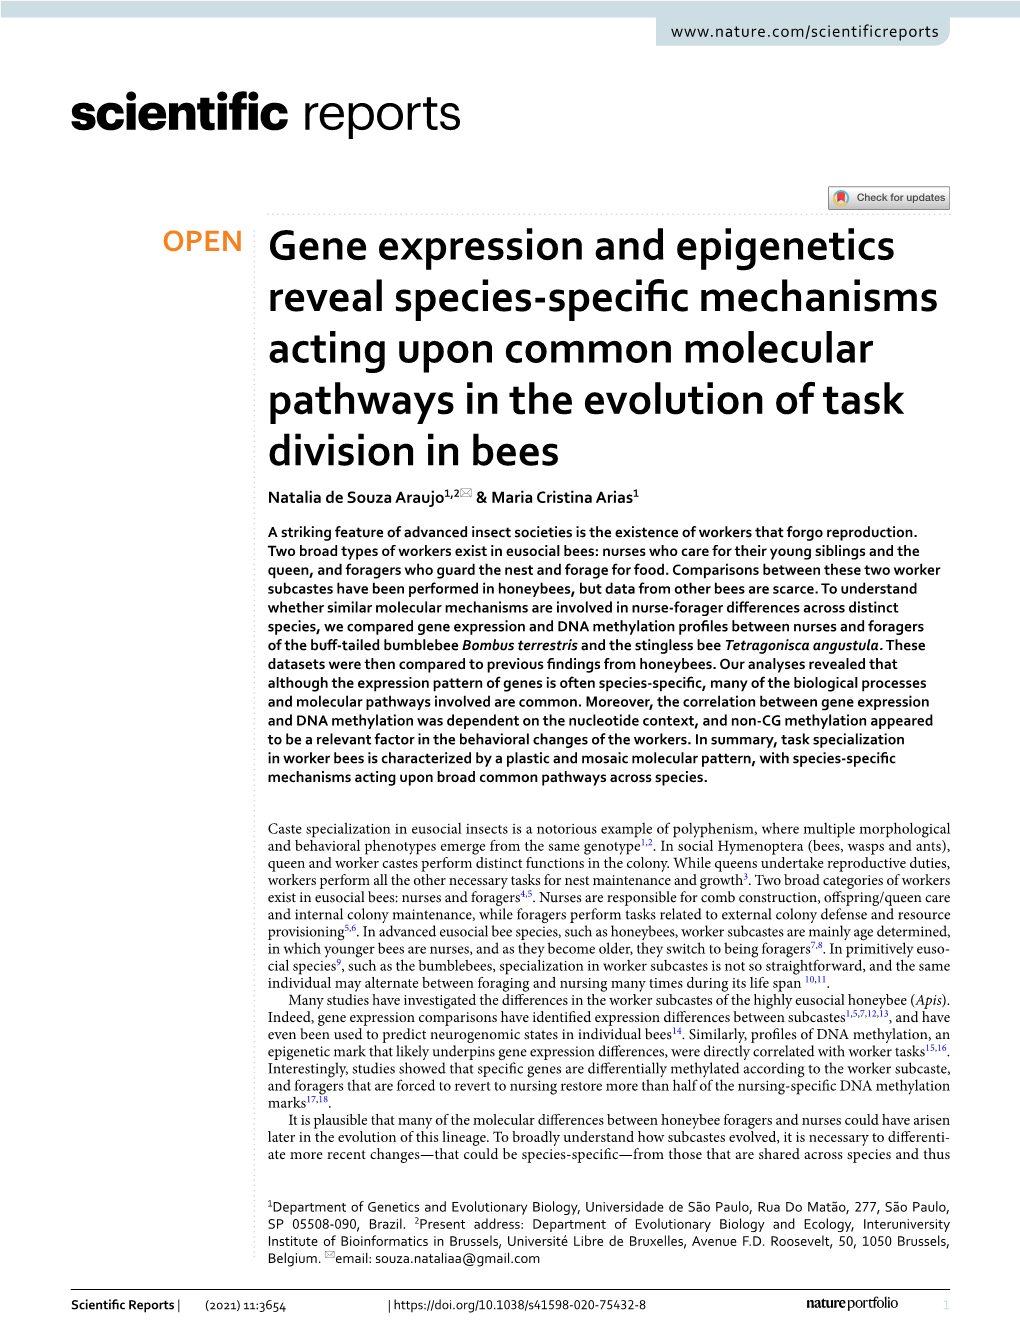 Gene Expression and Epigenetics Reveal Species-Specific